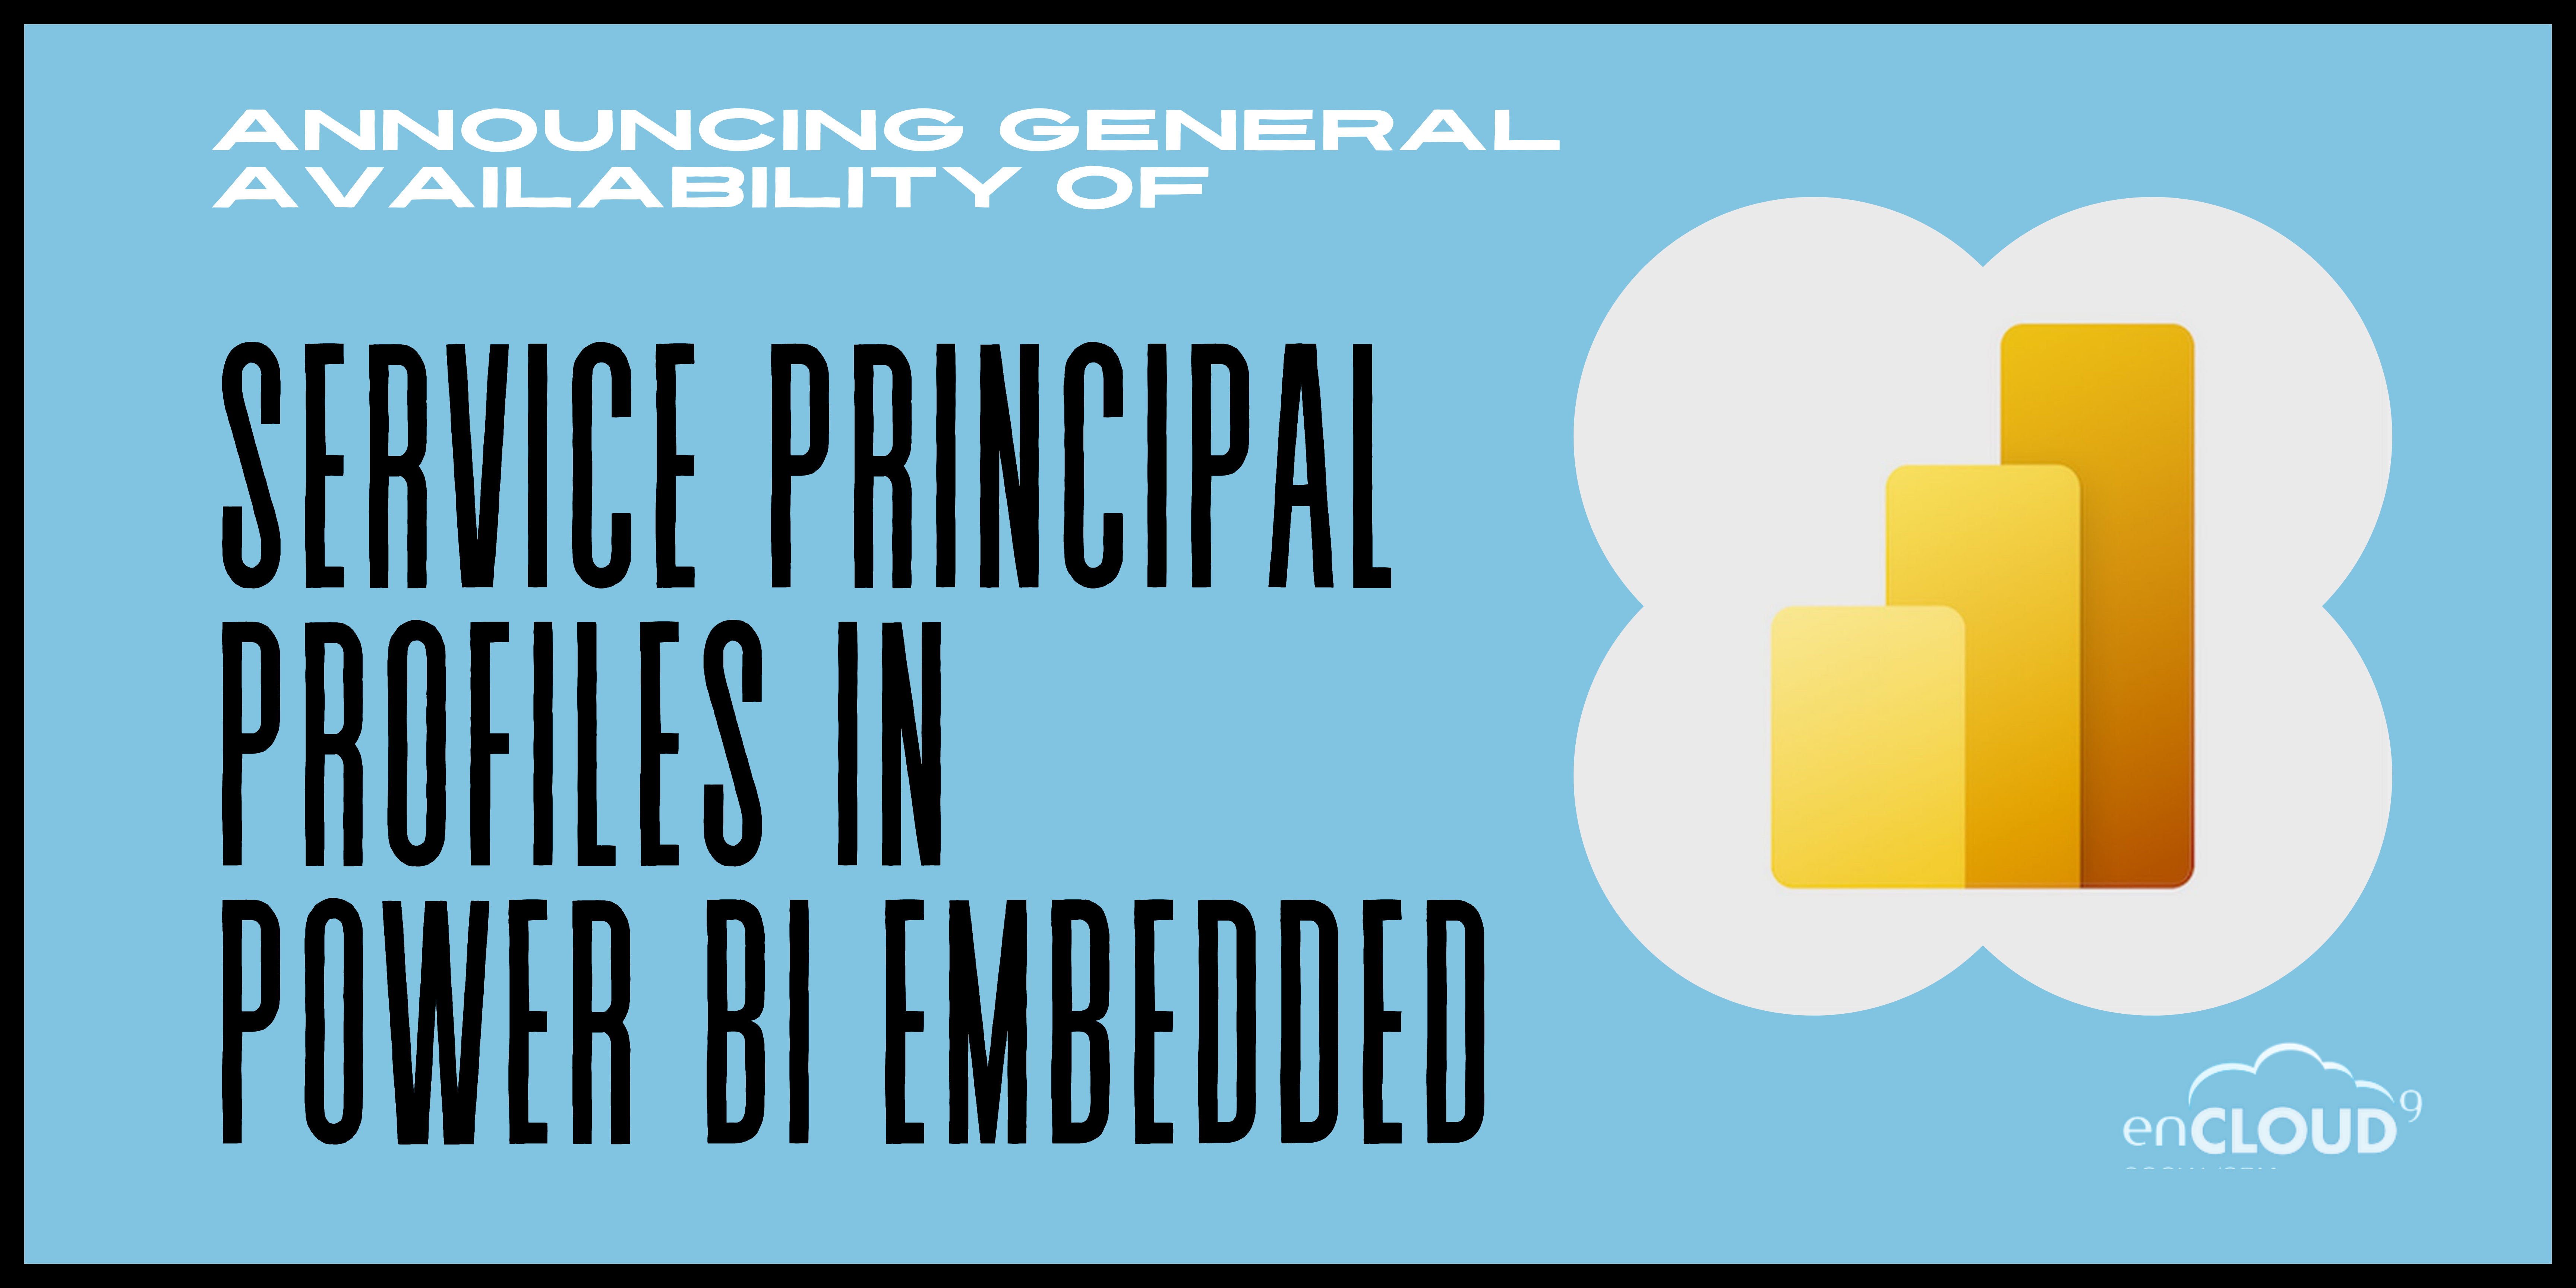 Service principal profiles in Power BI | enCloud9